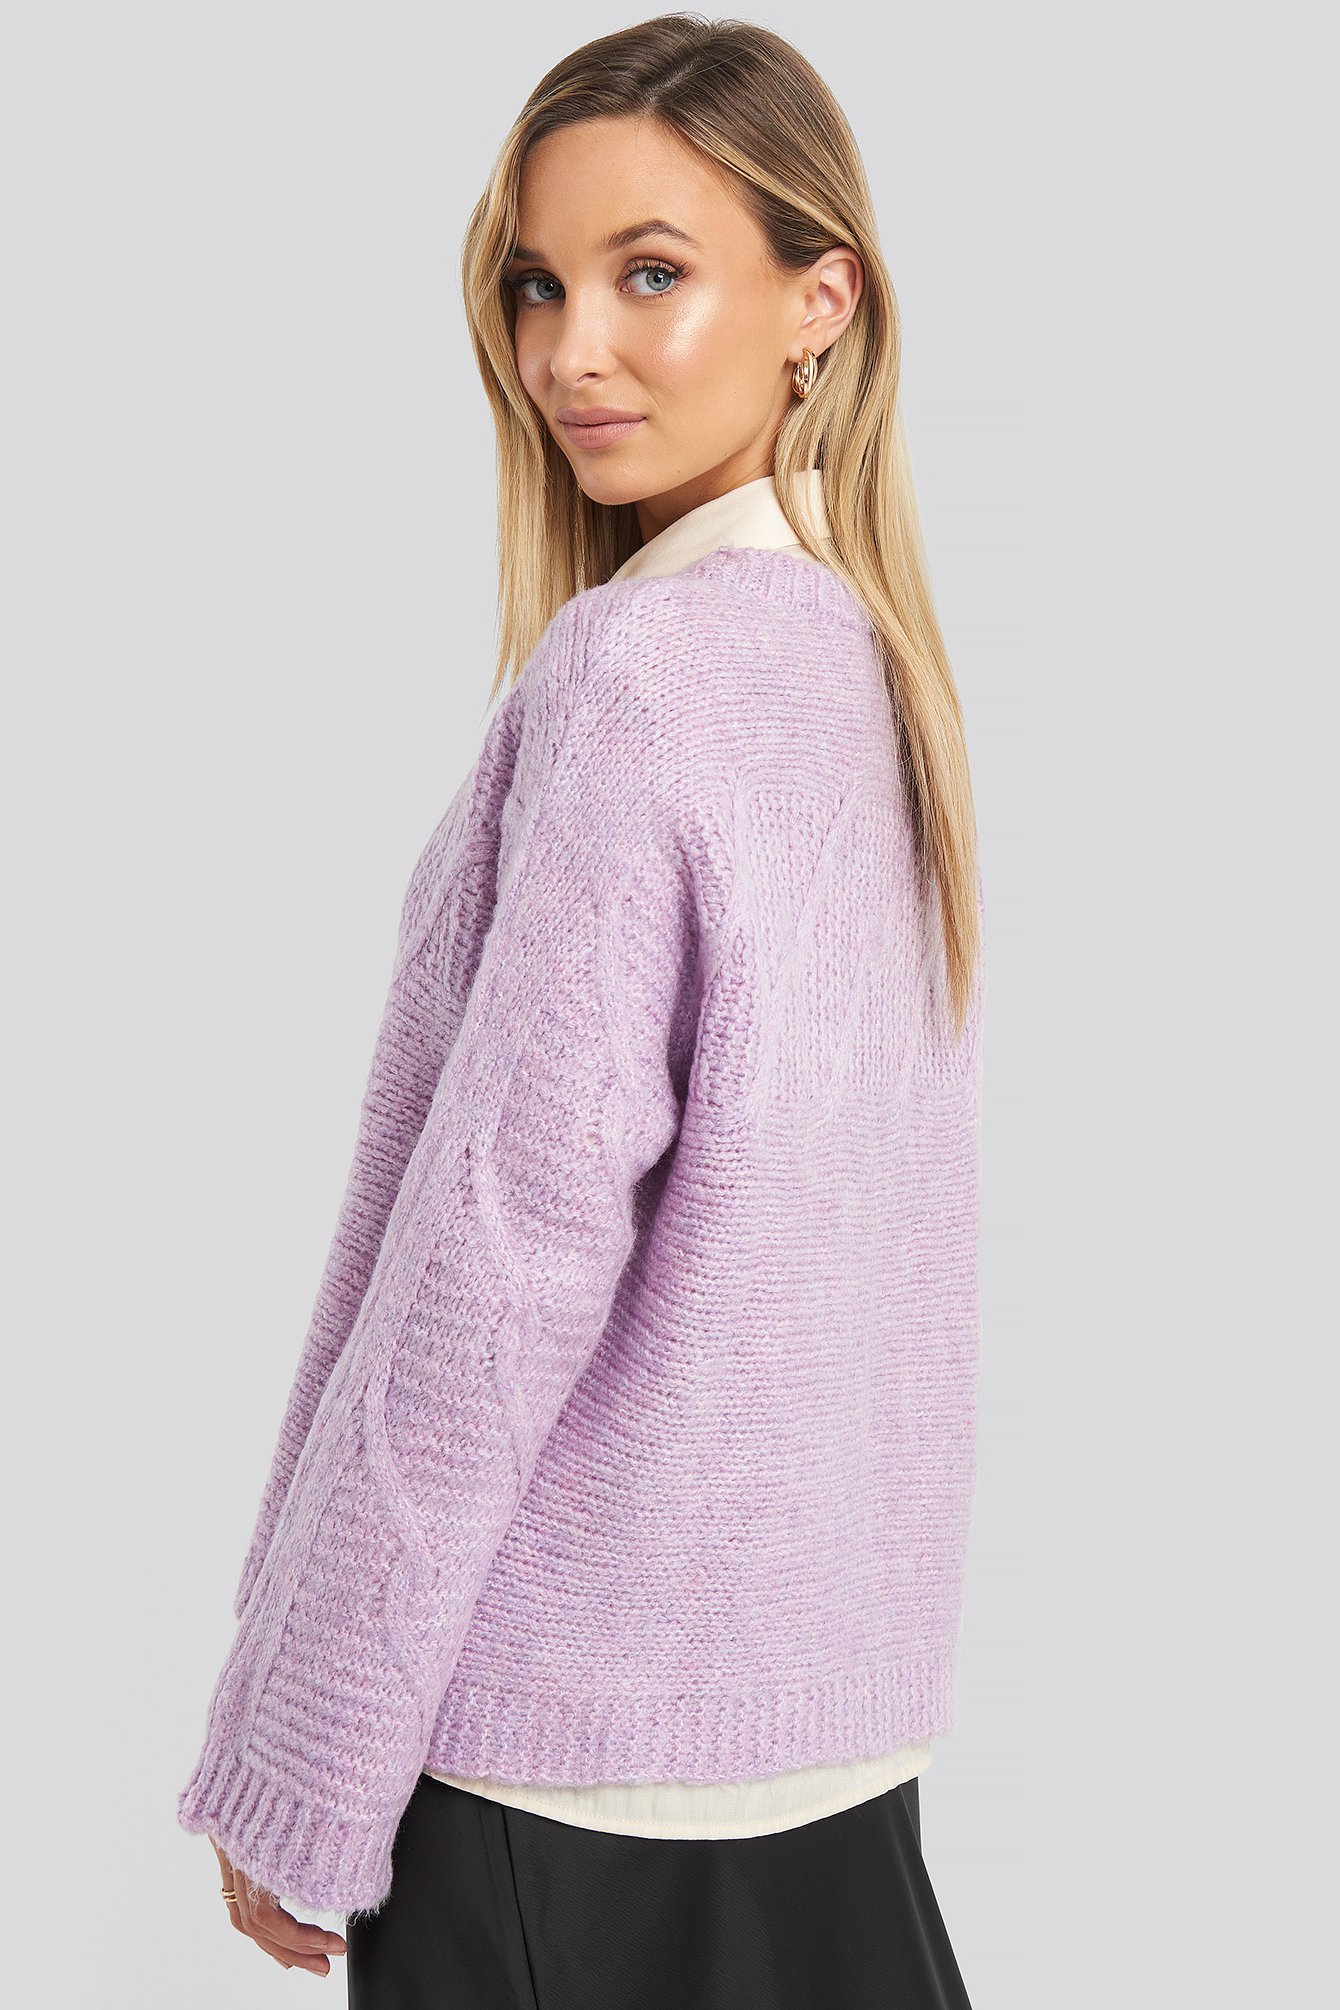 knit-detail-sweater-lila-na-kd